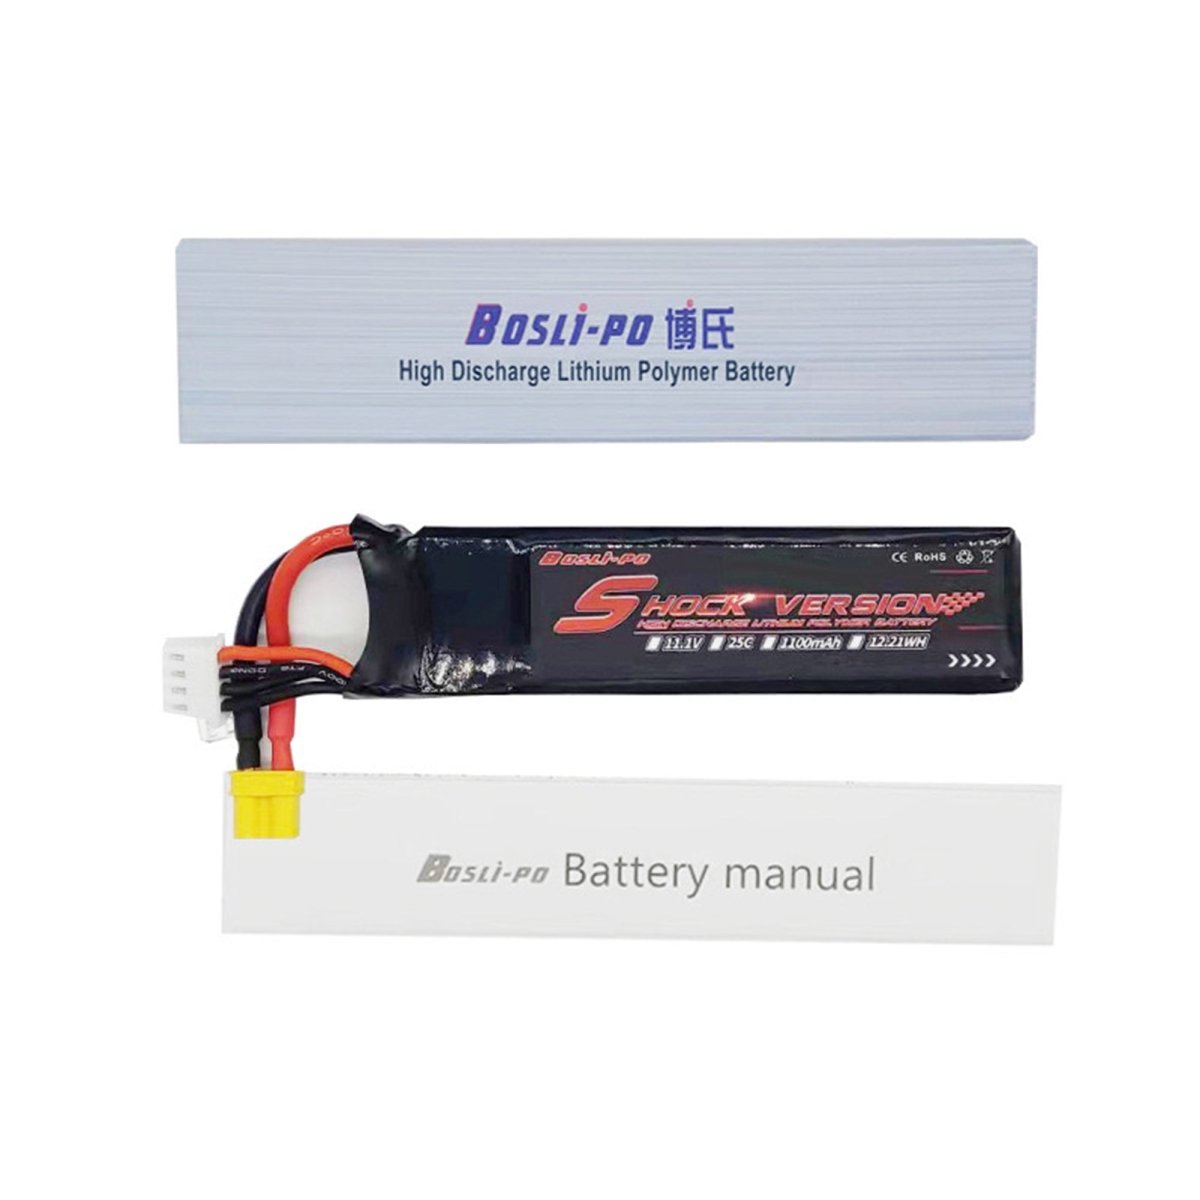 Batteries - EMERBUtoys